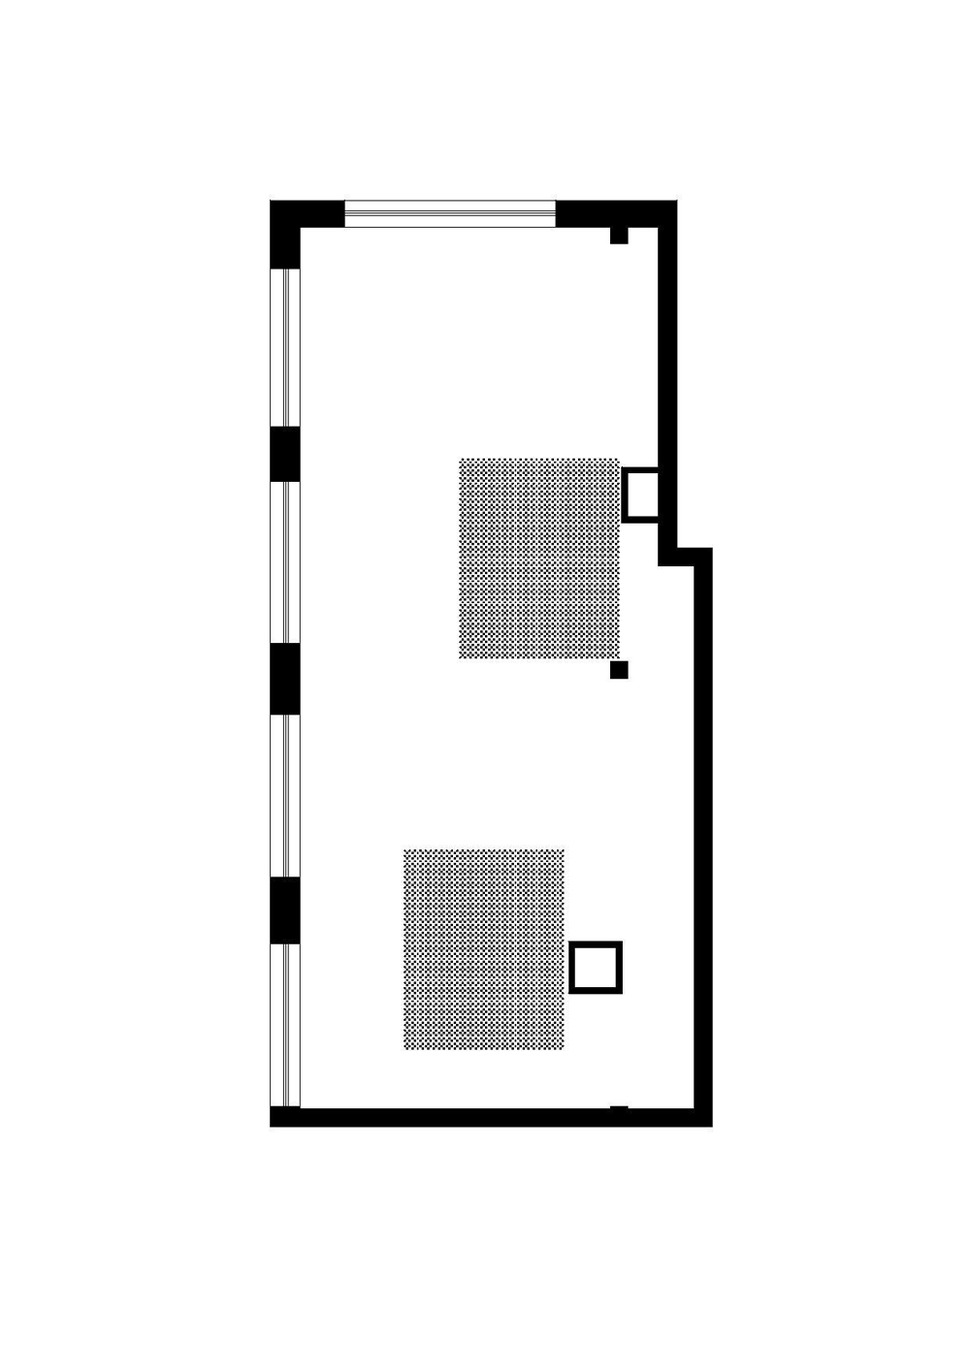 two-lofts-within-a-loft-20.jpg